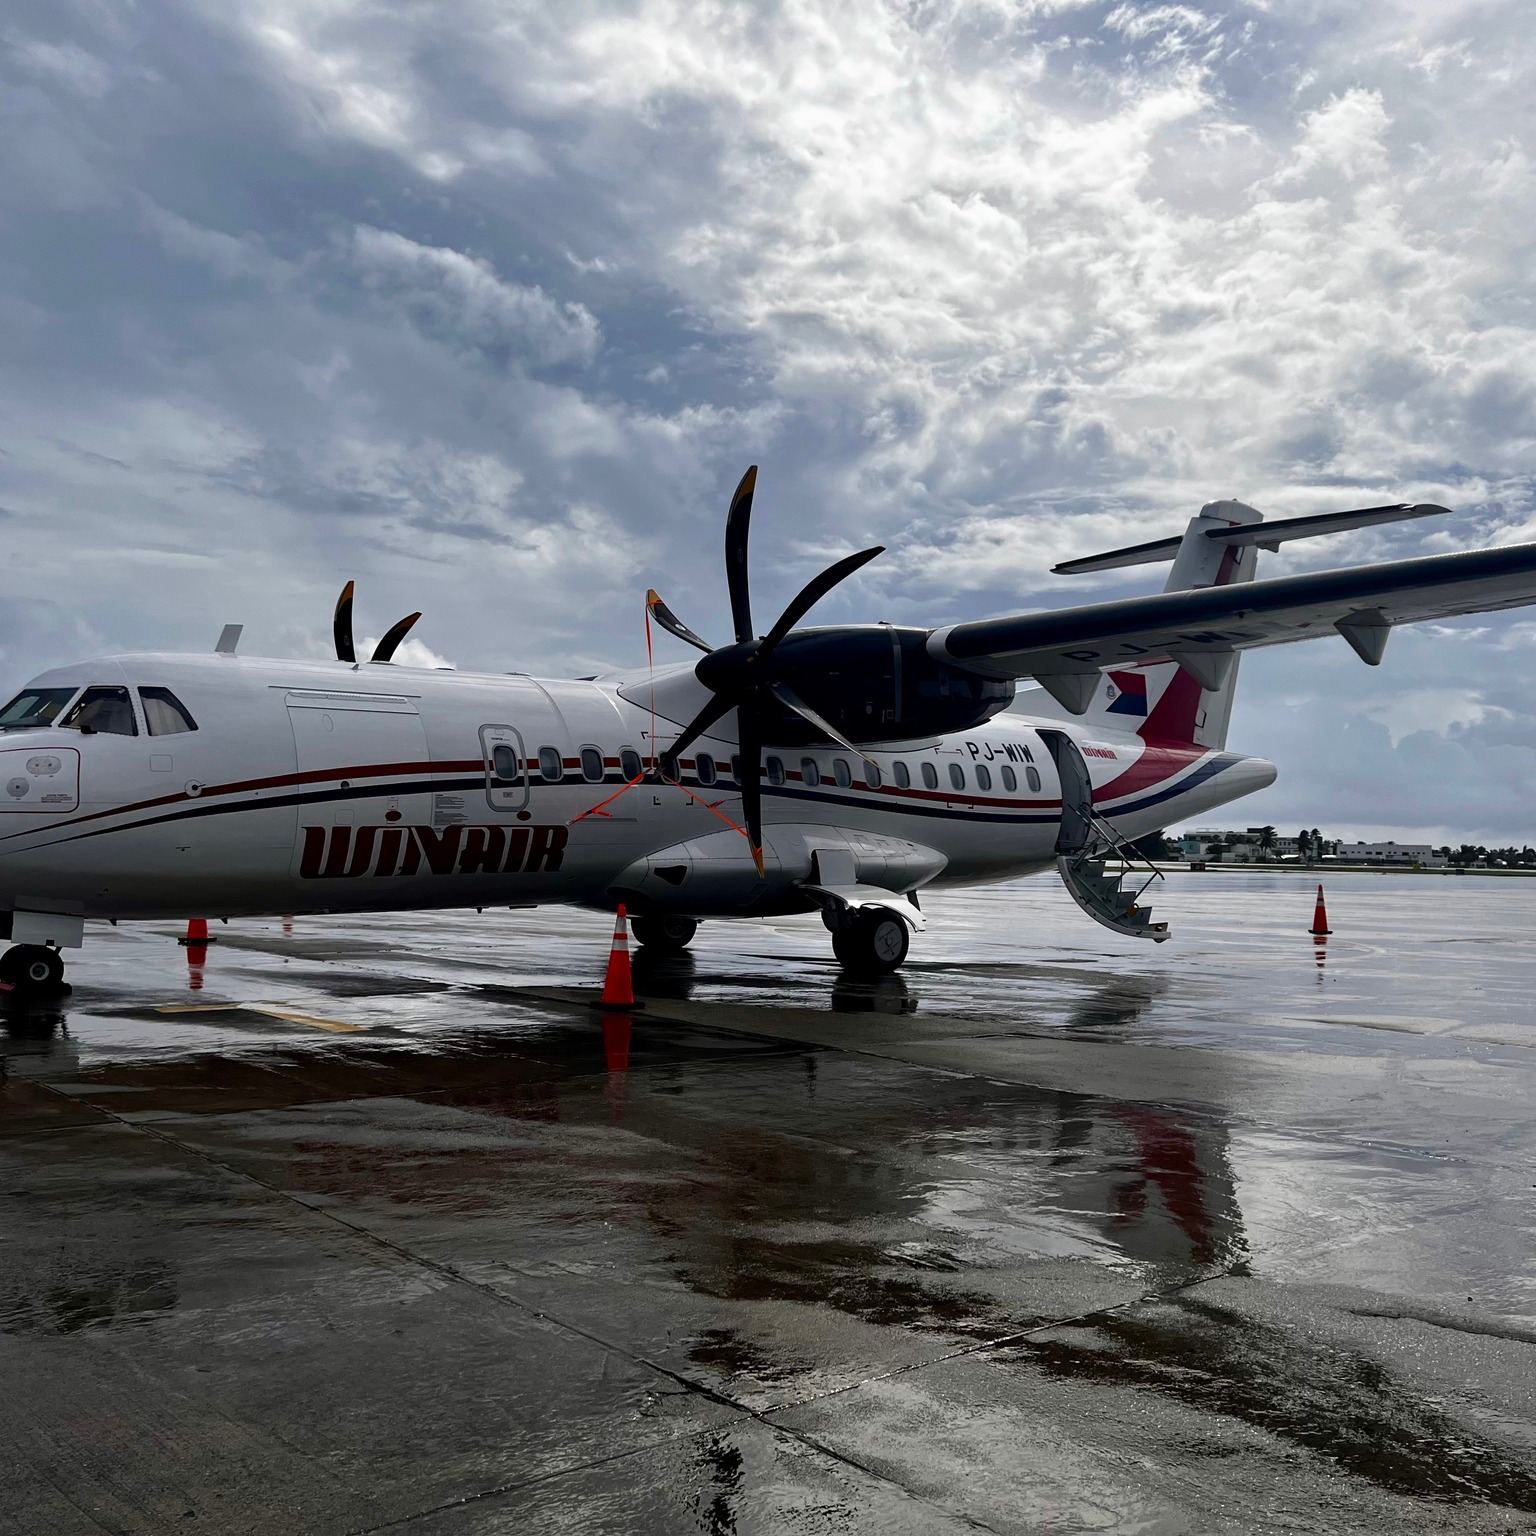 WINAIR welcomes second ATR 42-500 aircraft